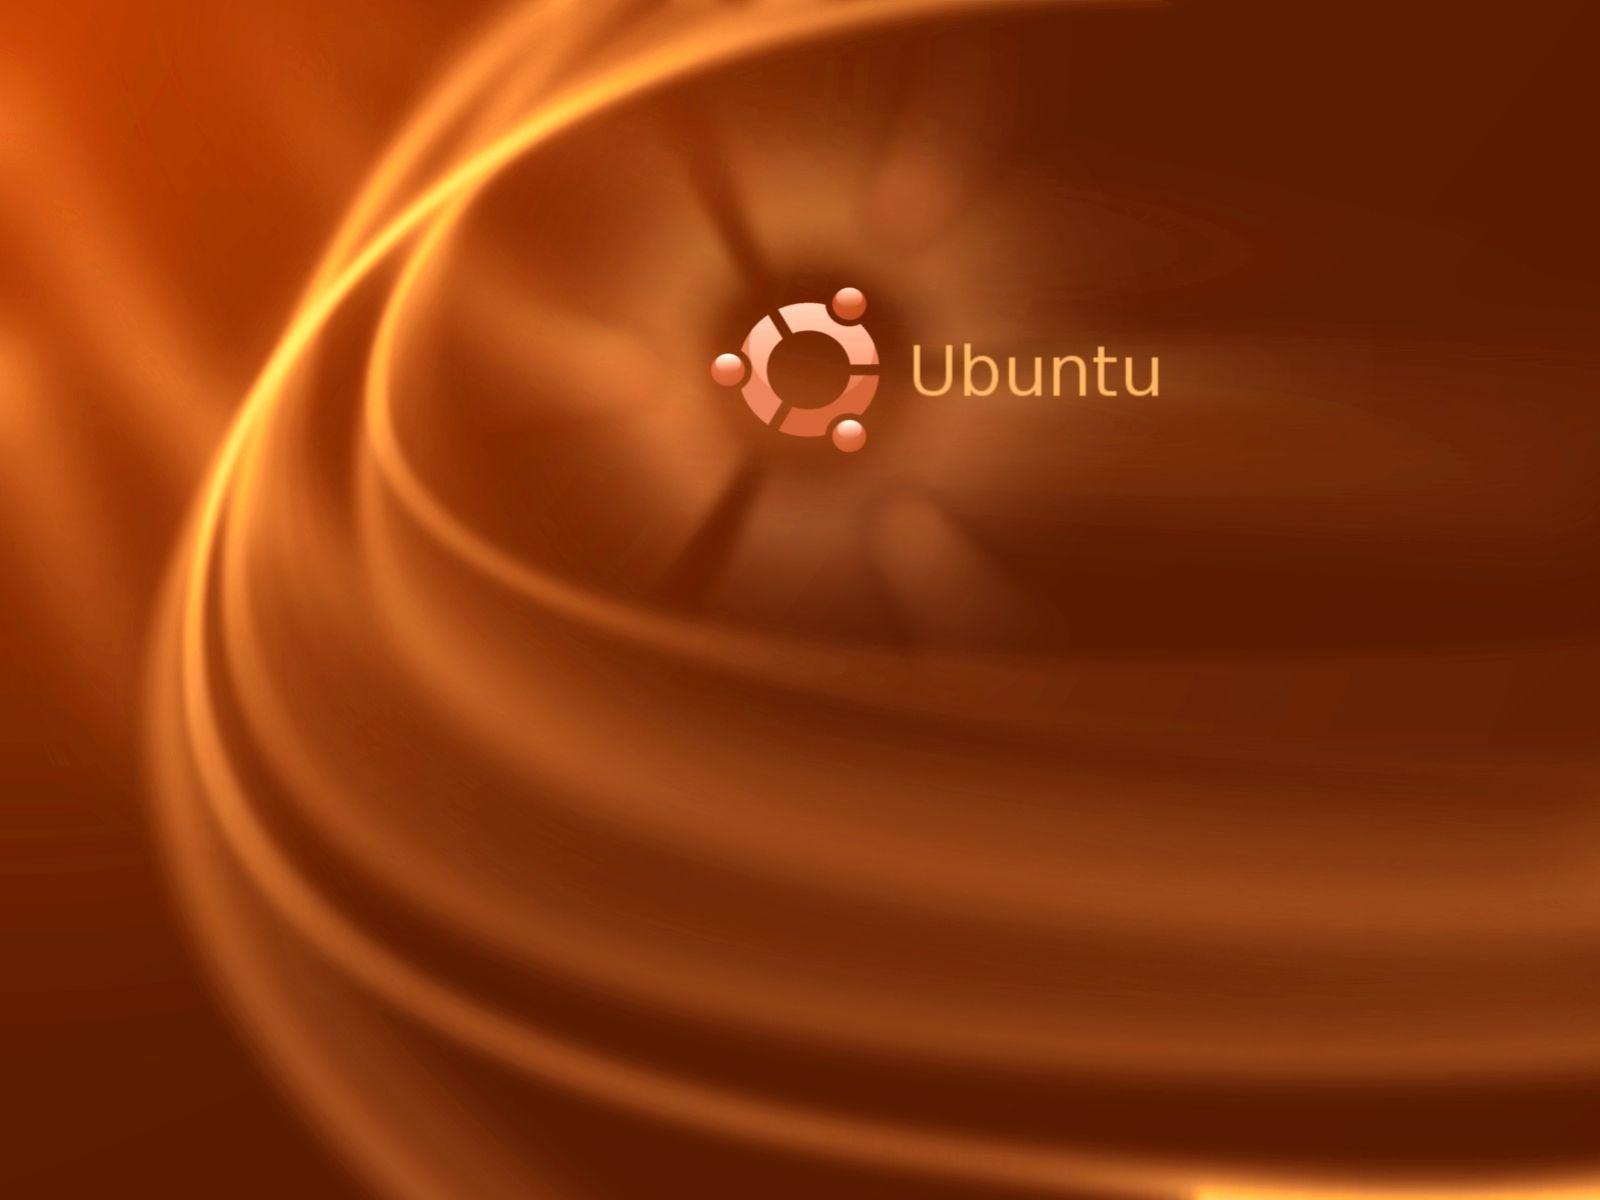 Ubuntu Wallpaper.biz: Scary Image